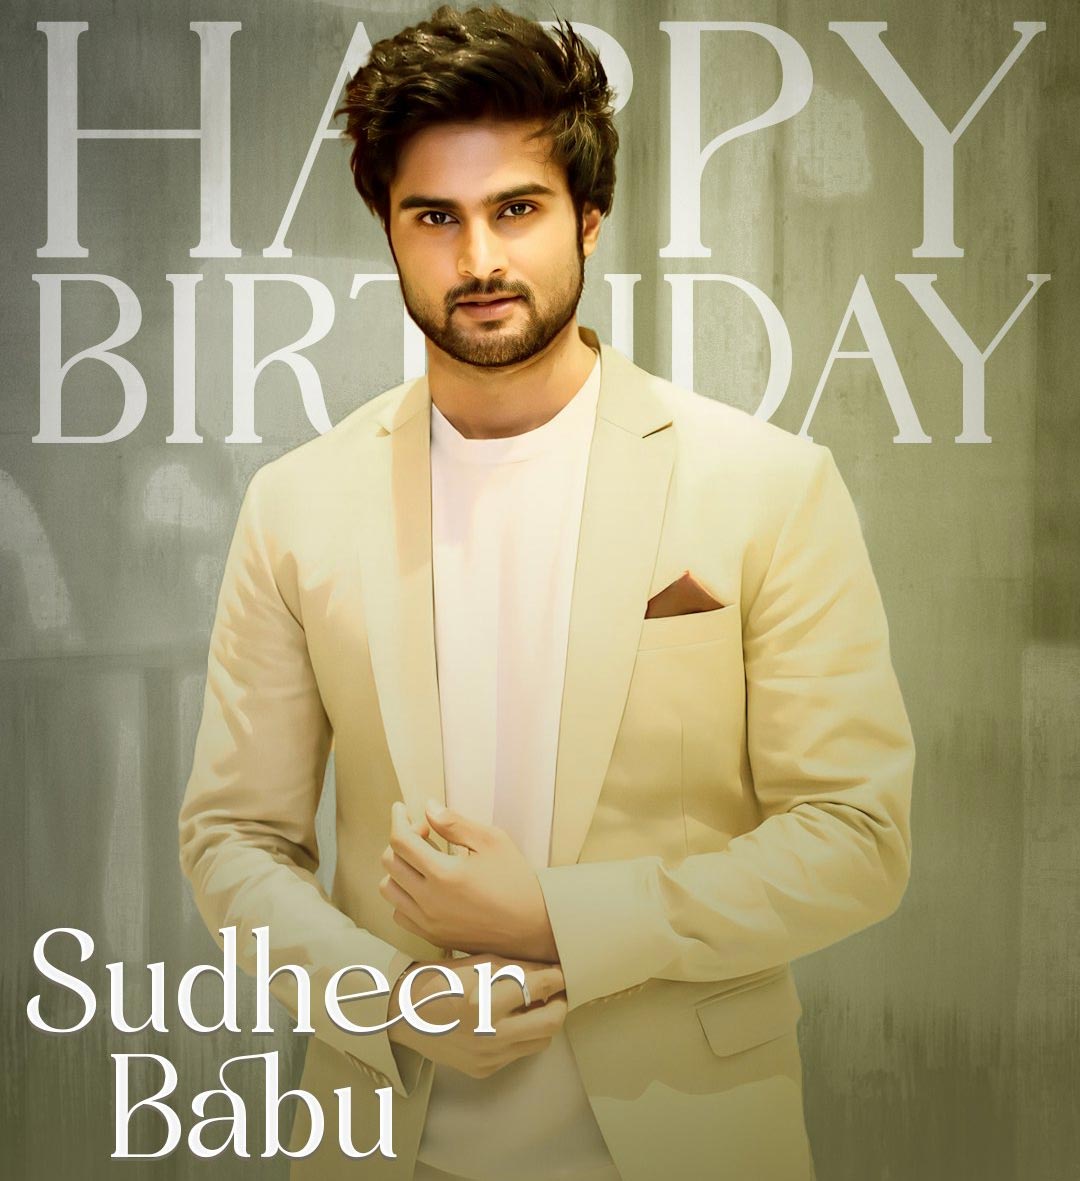 Happy Birthday to Sudheer Babu